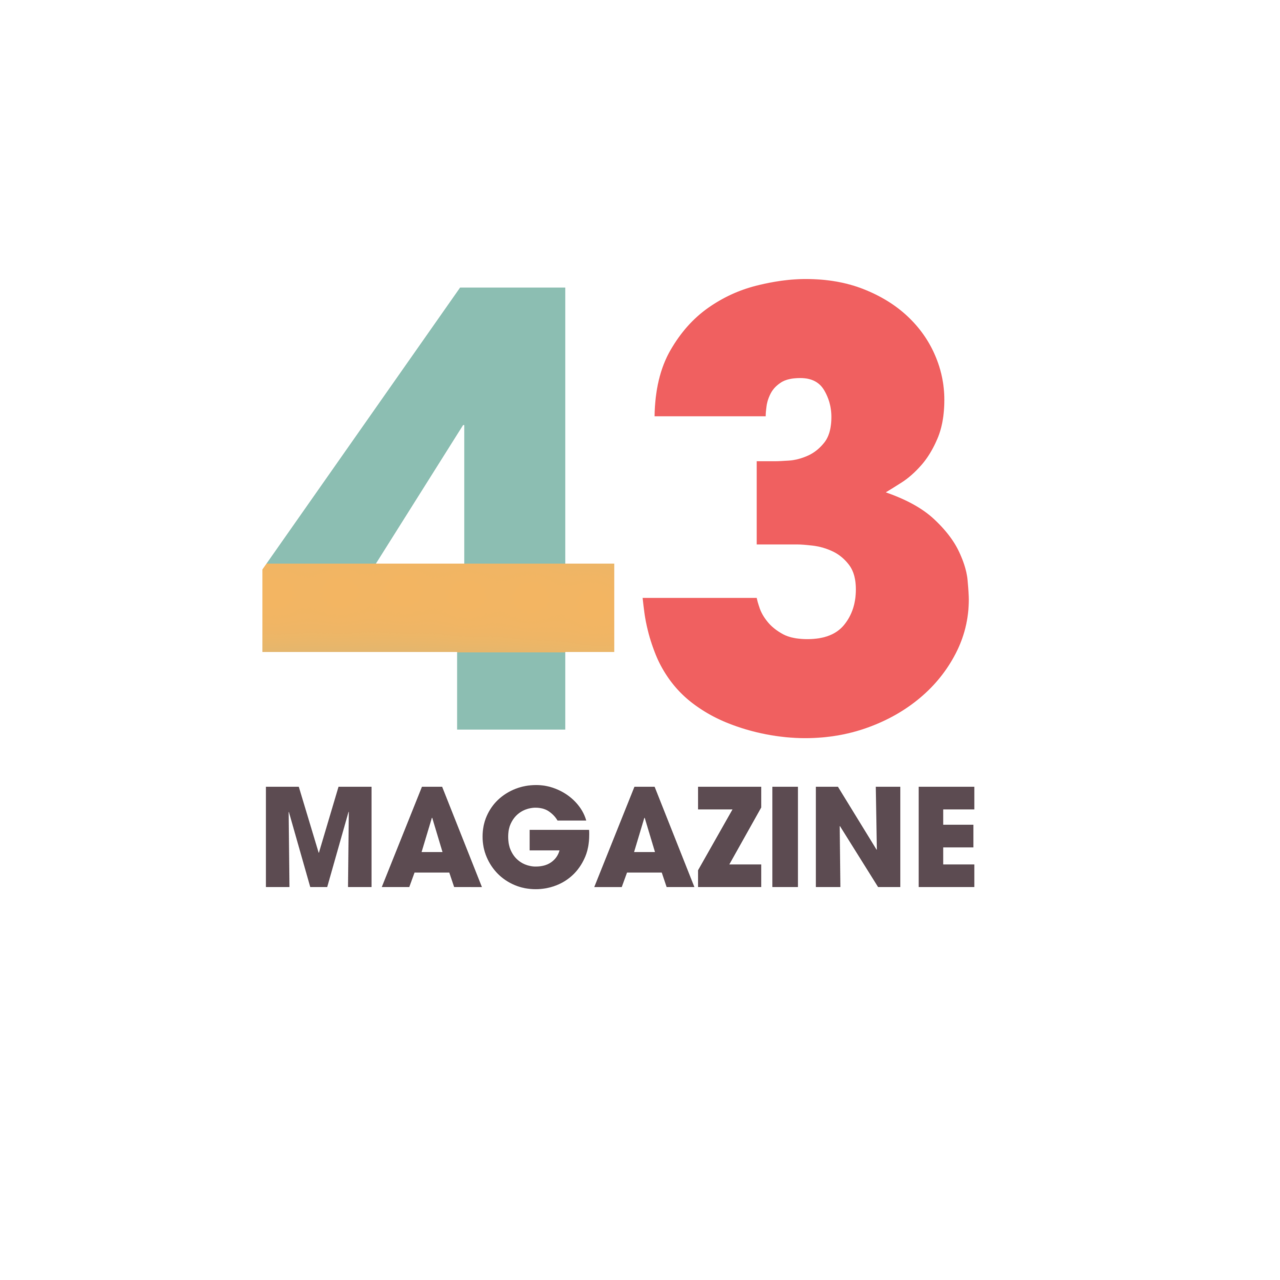 Magazine 43